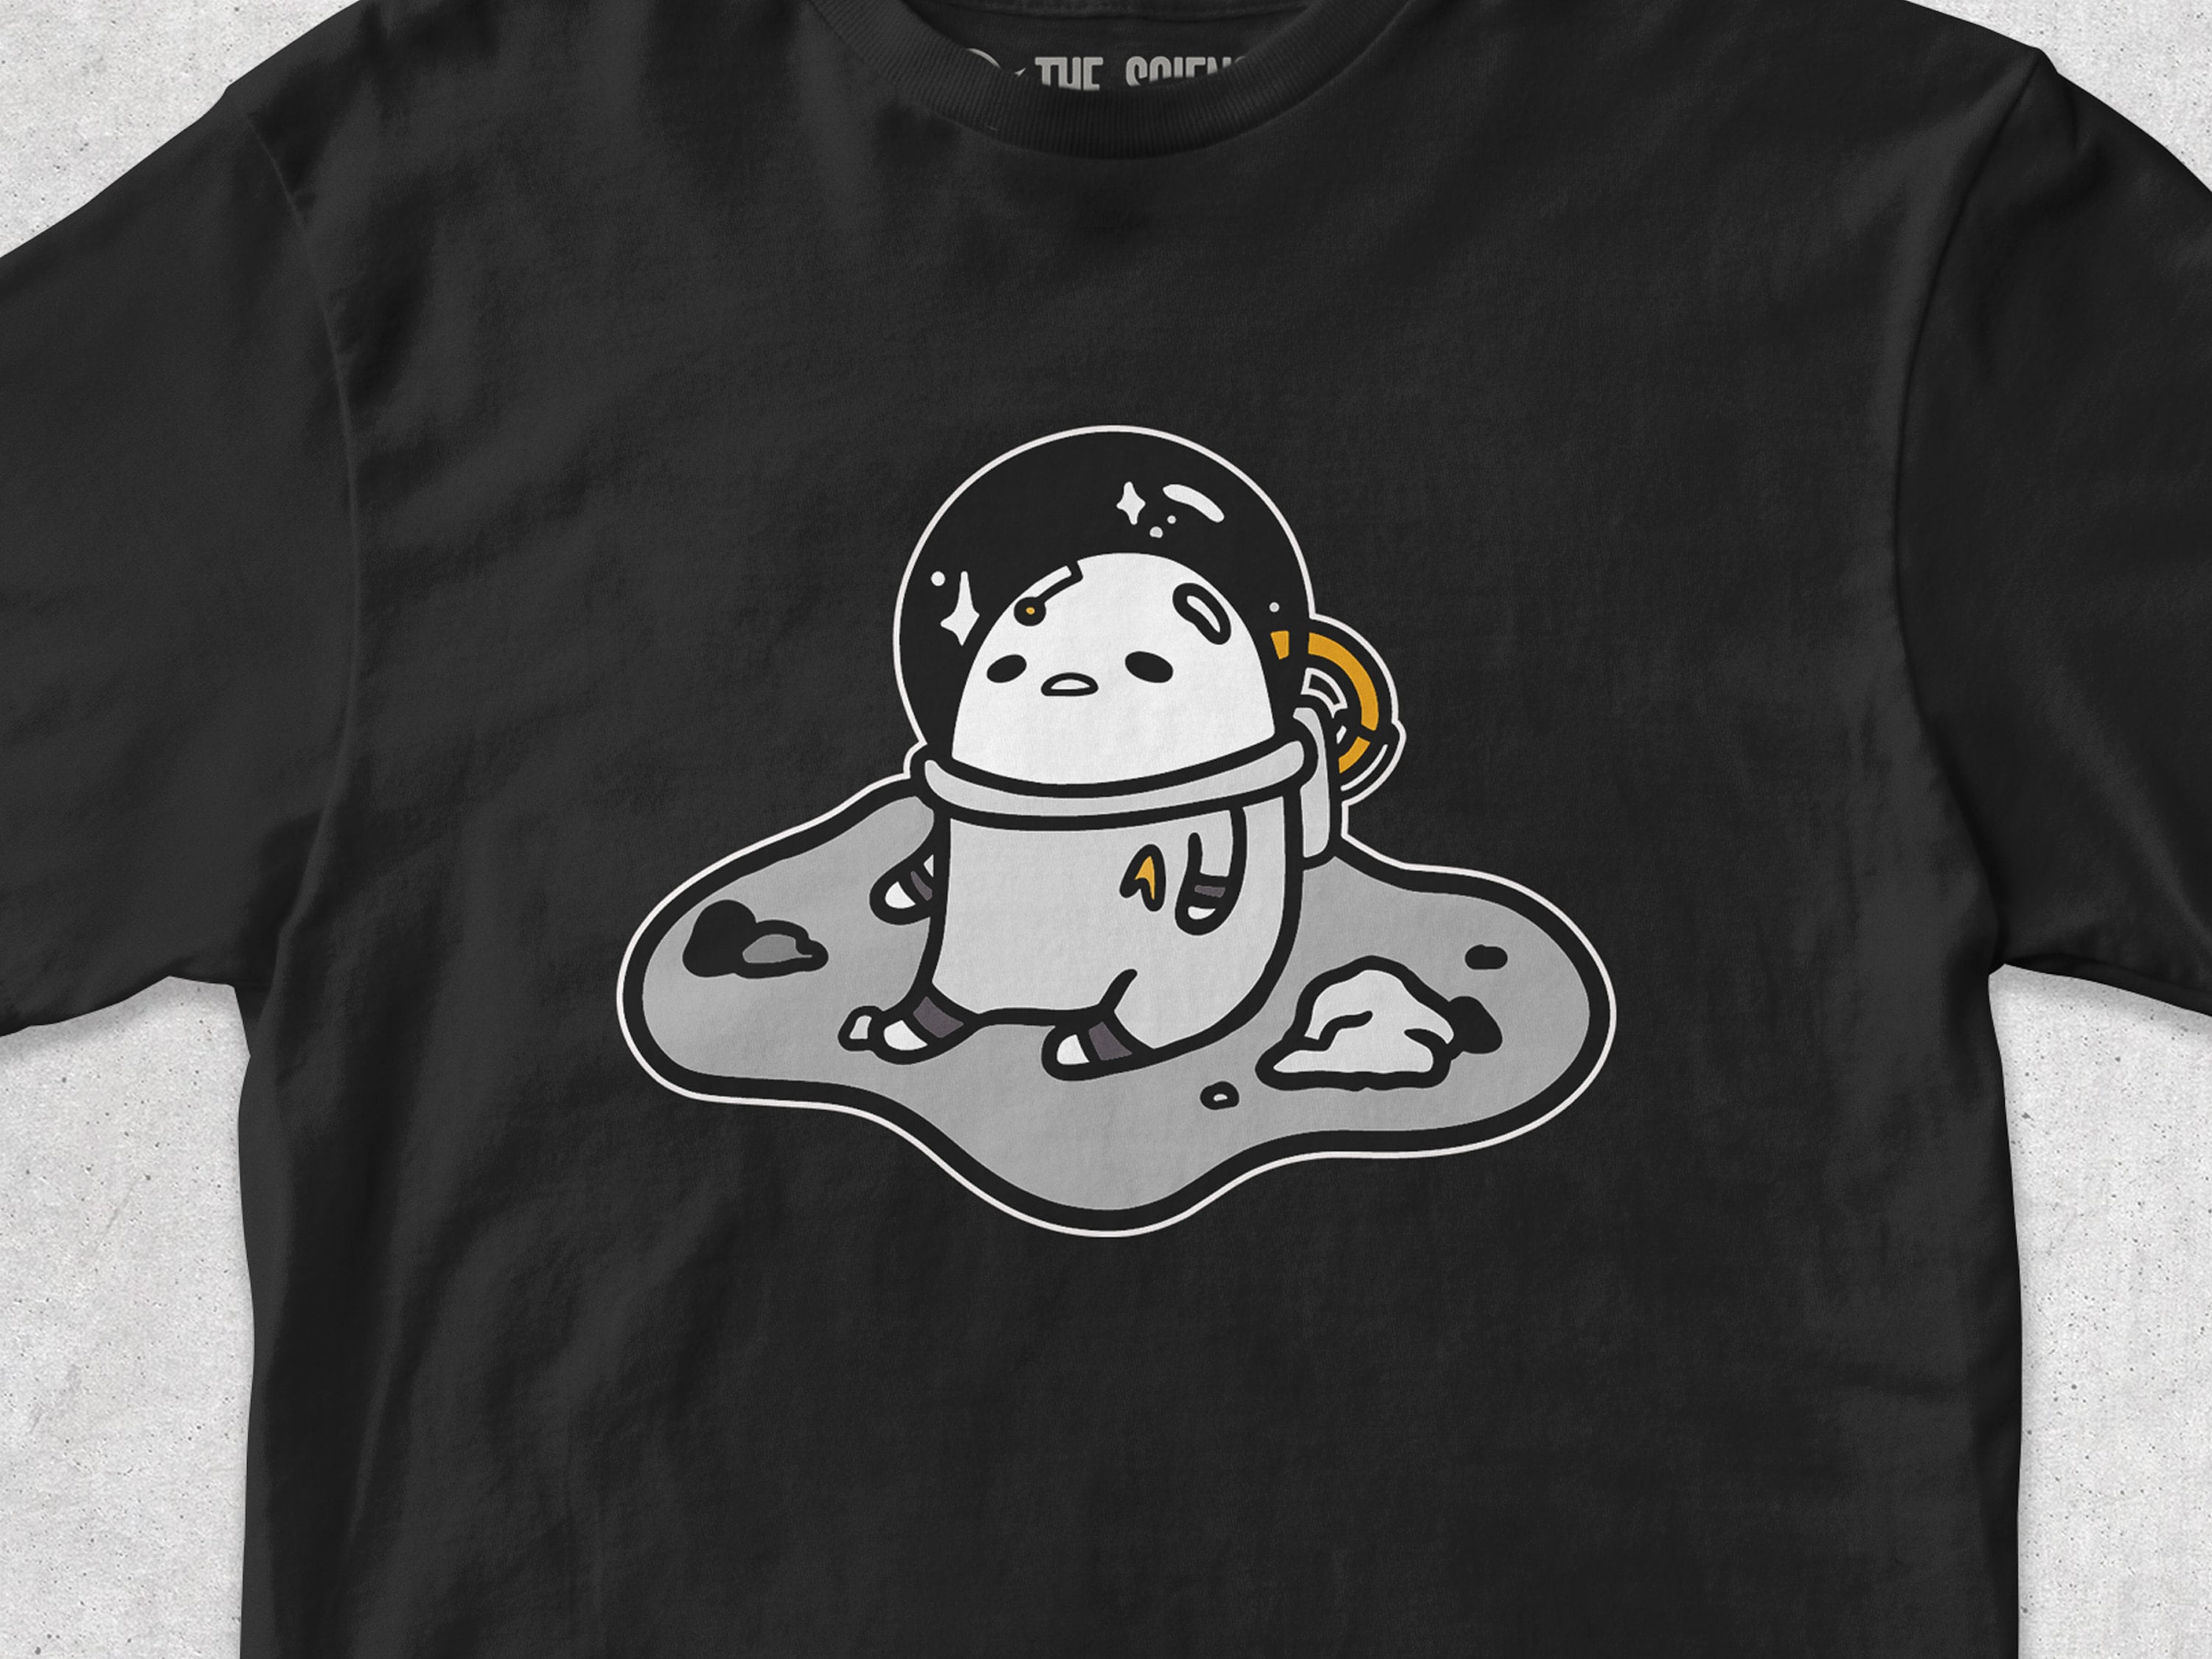 Alien-Tama T-Shirt - Kawaii Alien Egg Tee - Cute Space / Astronomy Fashion